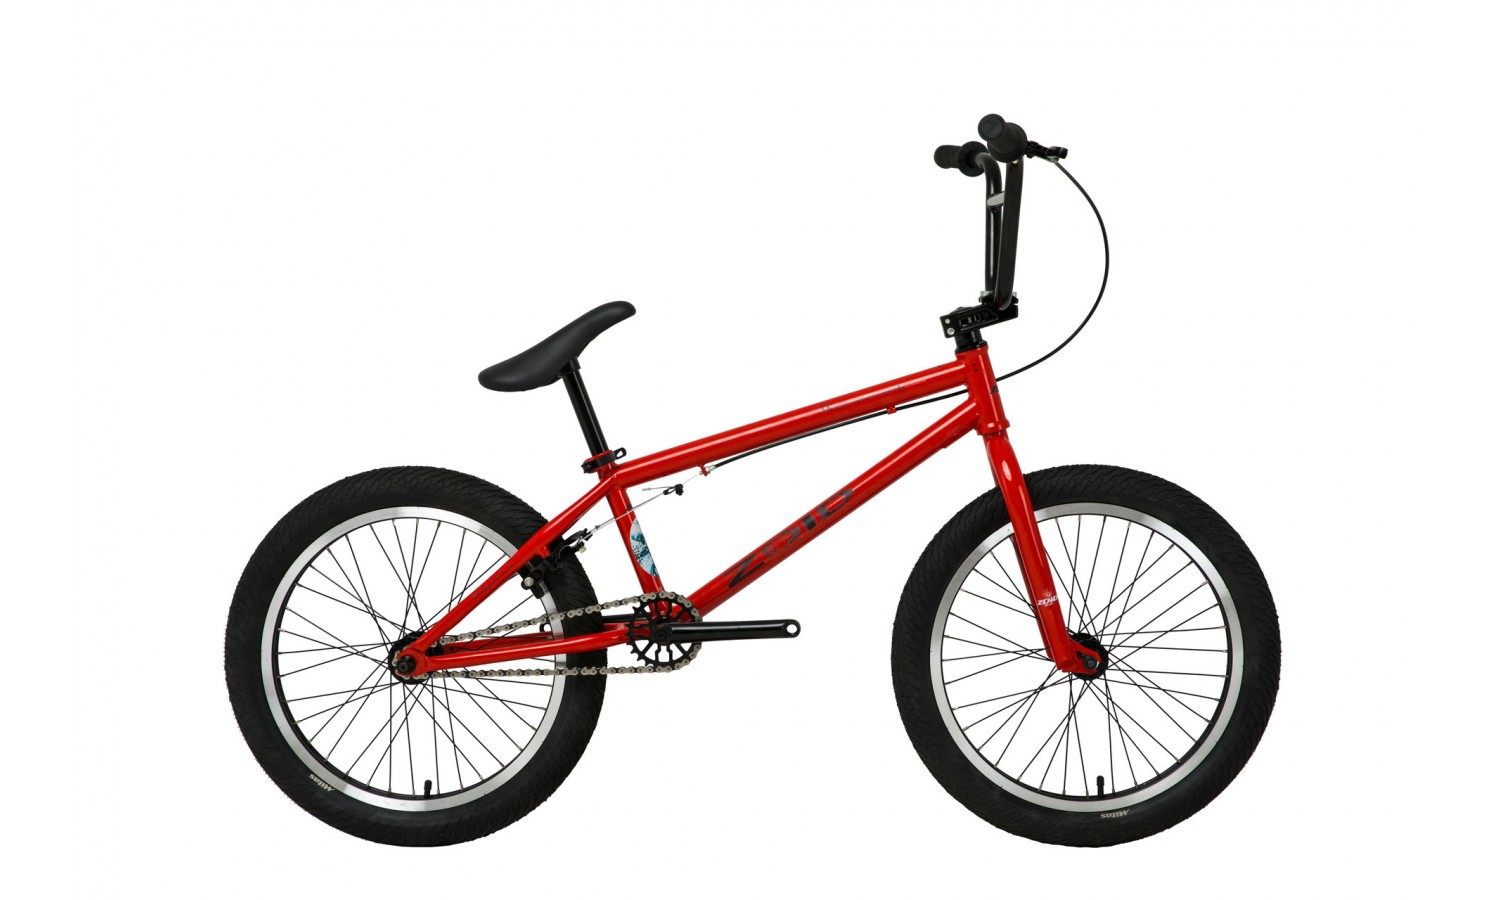 Bisan Zoid Bmx Bisiklet (Kırmızı-Siyah)